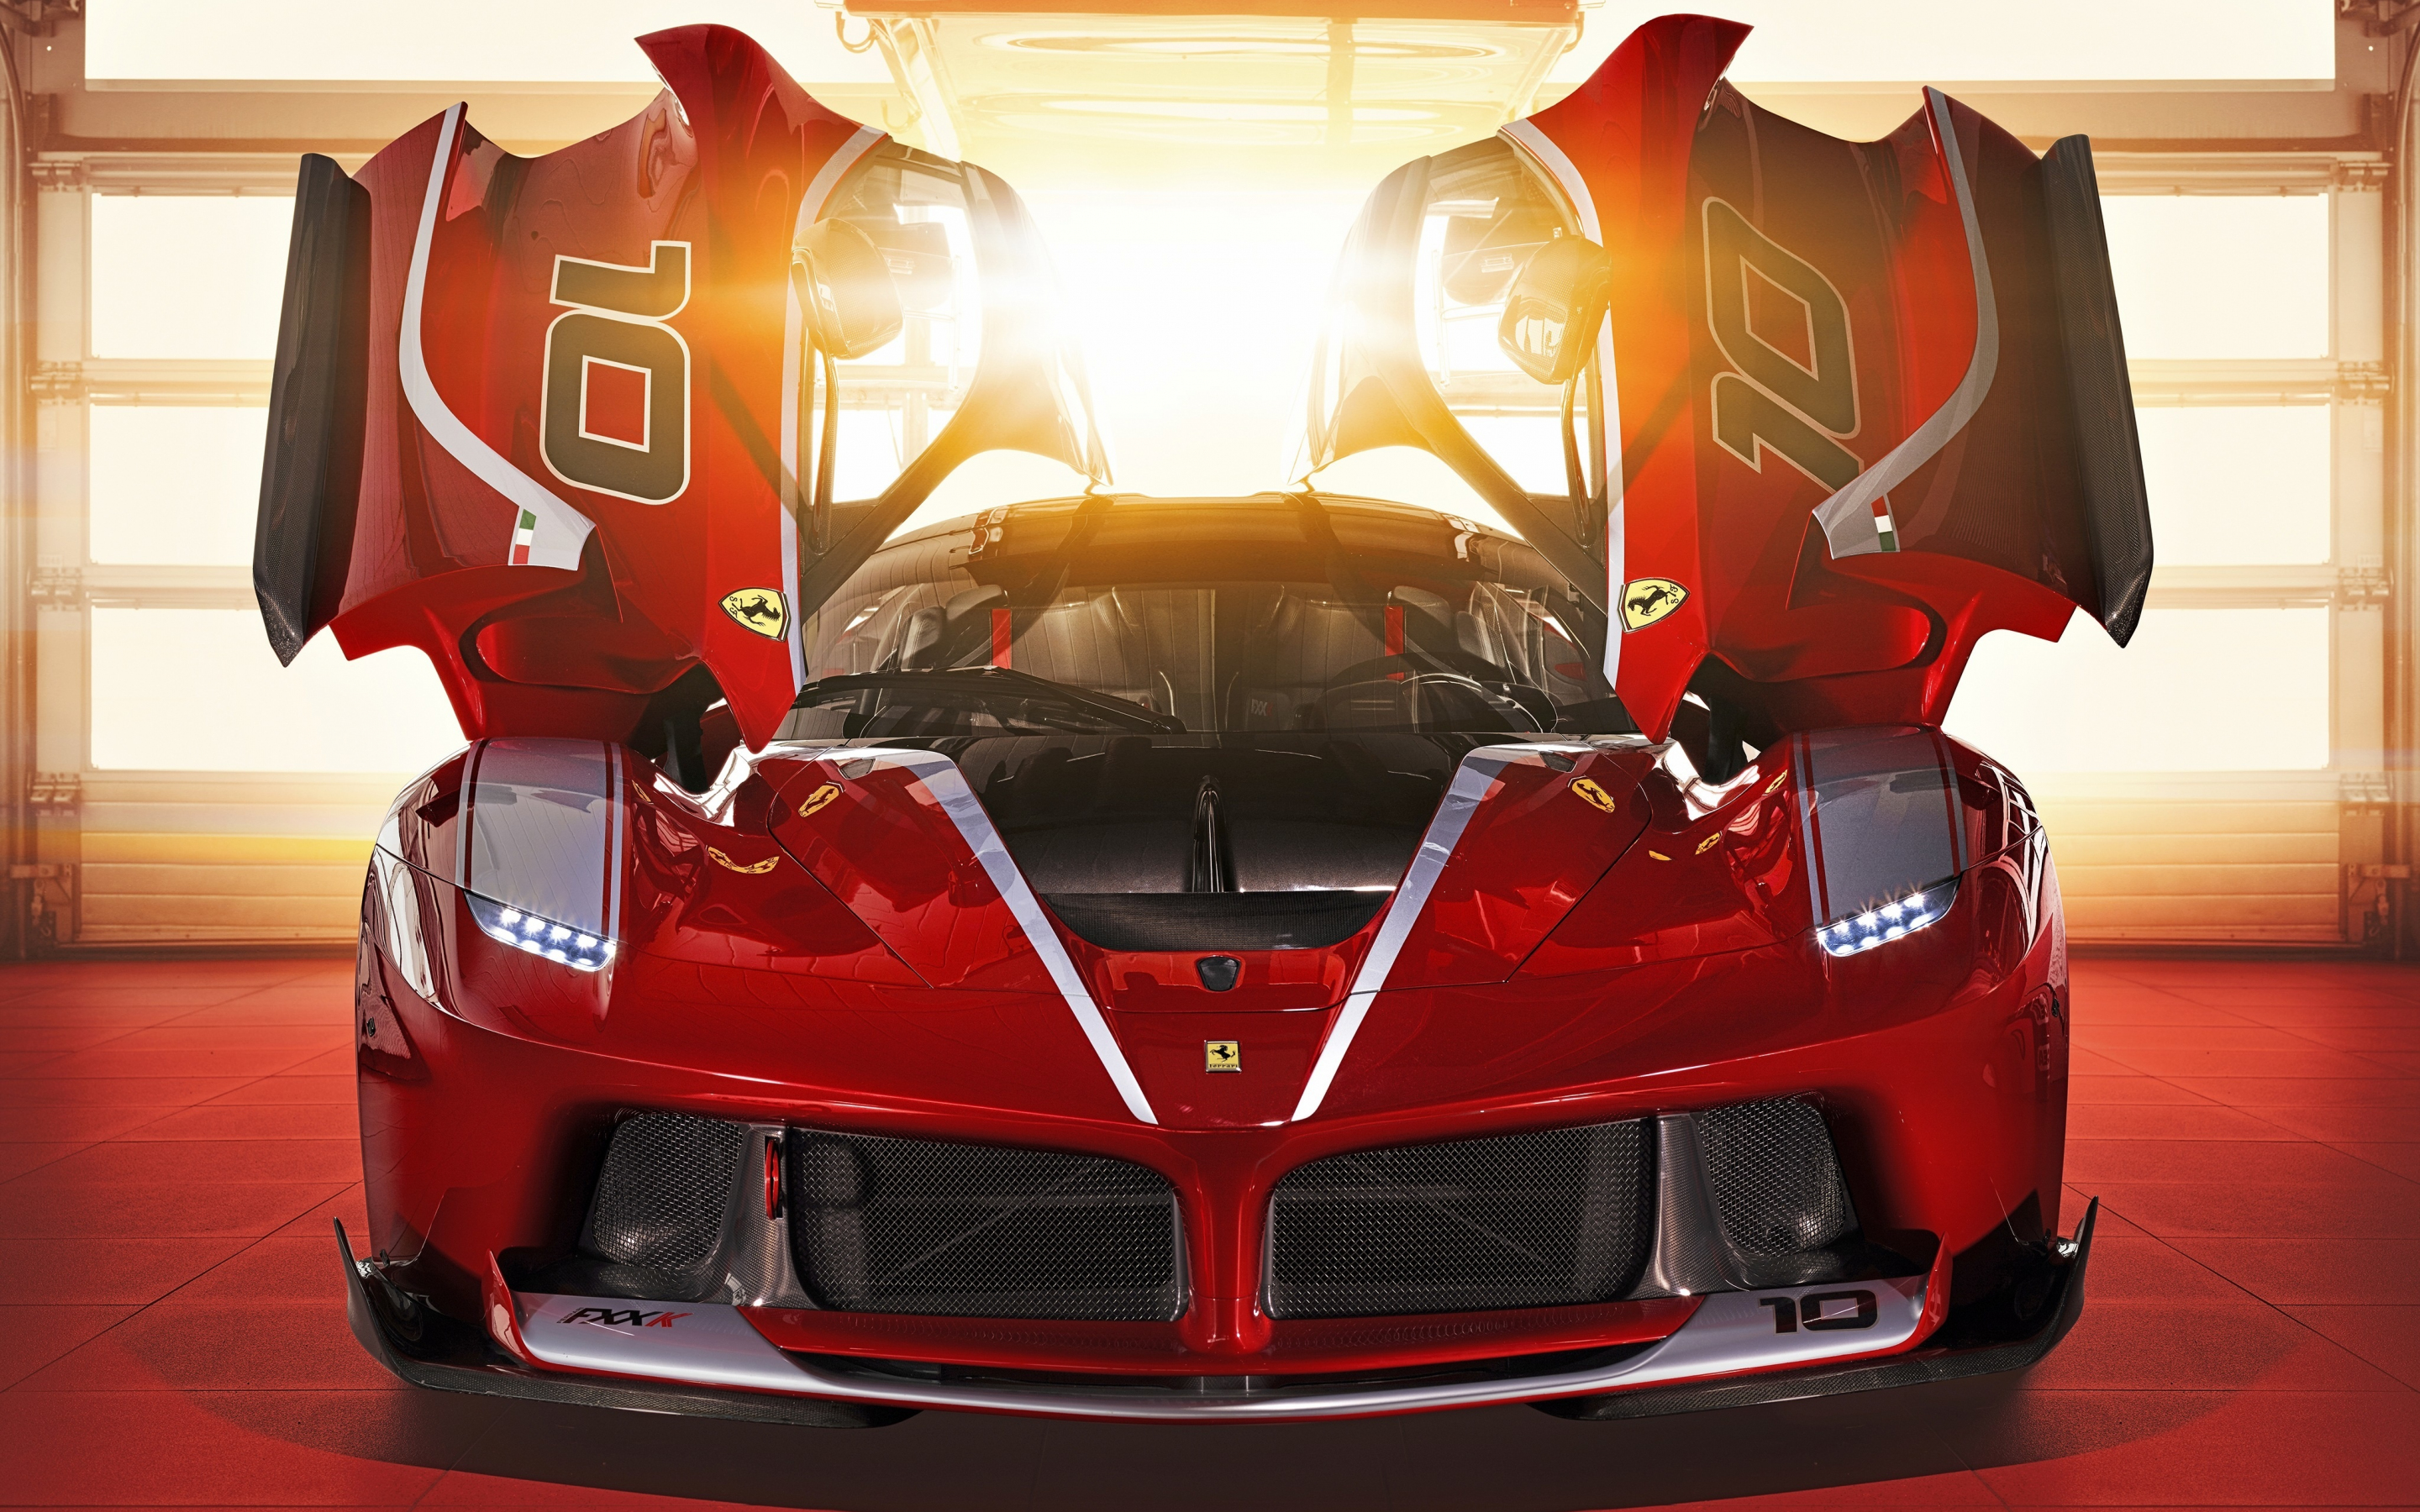 Ferrari FXX-K, red supercar, 2880x1800 wallpaper